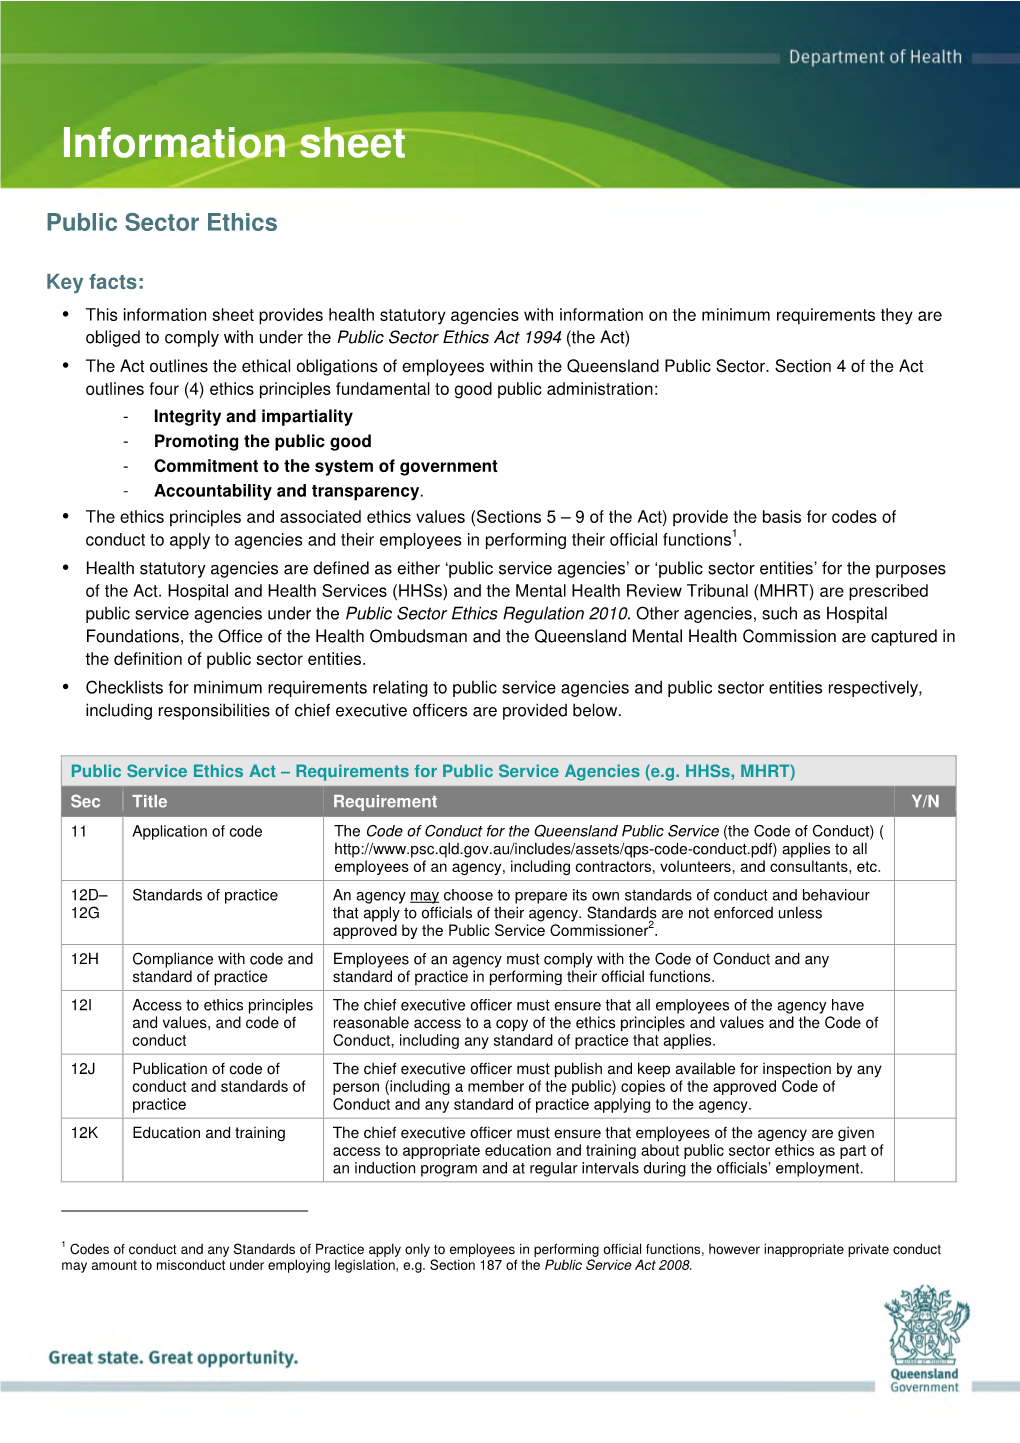 Public Sector Ethics Information Sheet (Health Statutory Agencies)